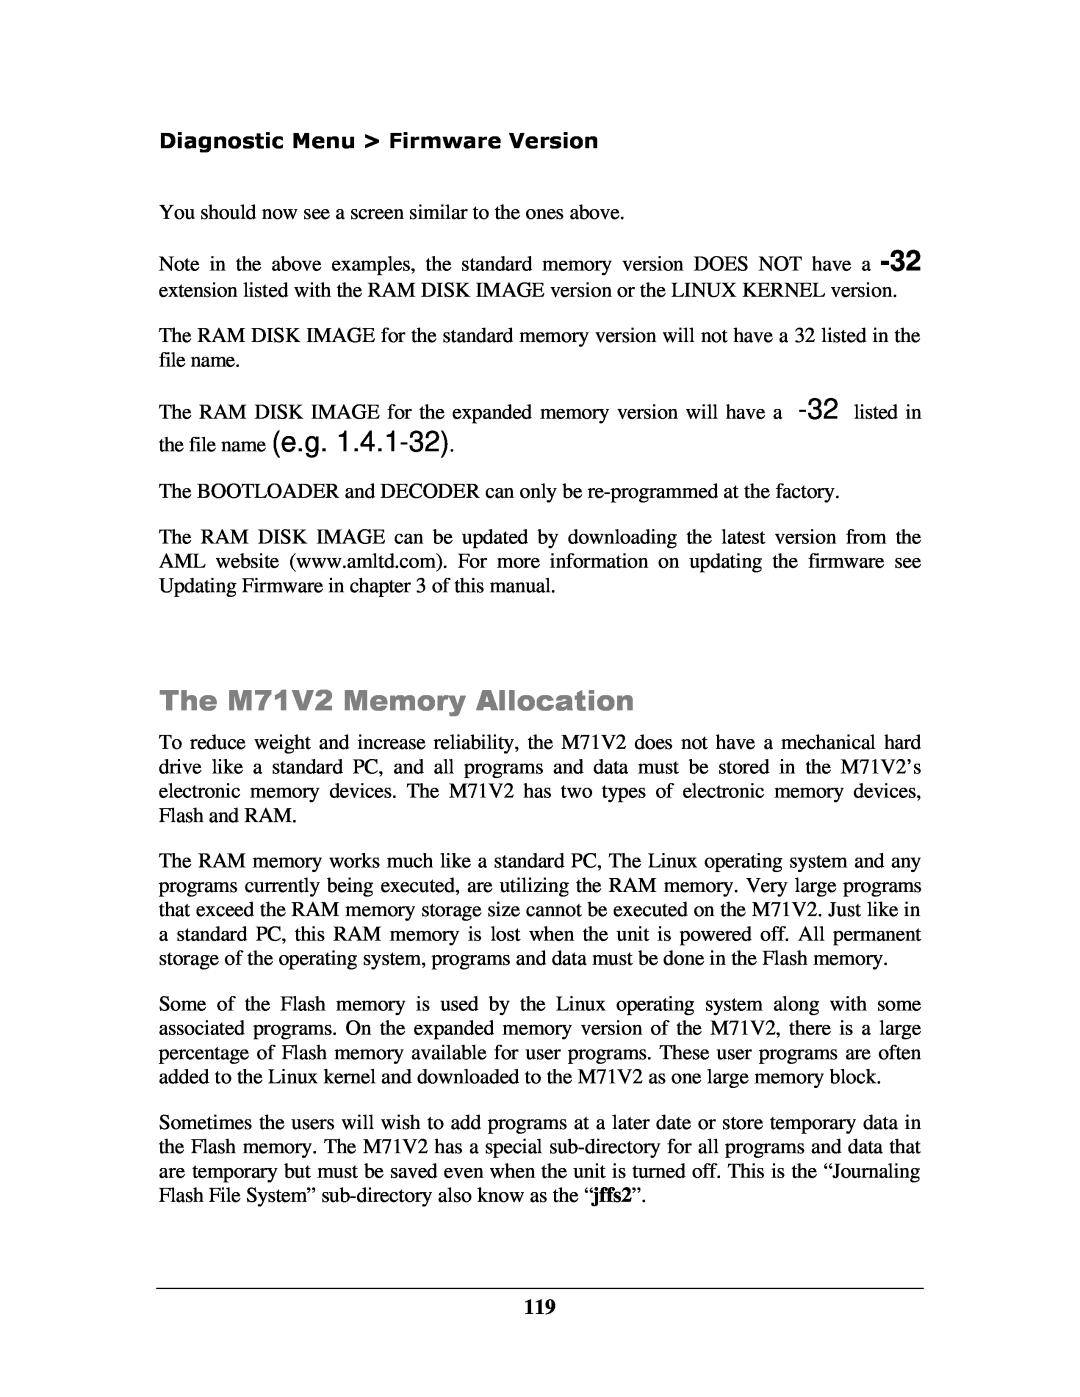 IBM manual The M71V2 Memory Allocation, Diagnostic Menu Firmware Version 